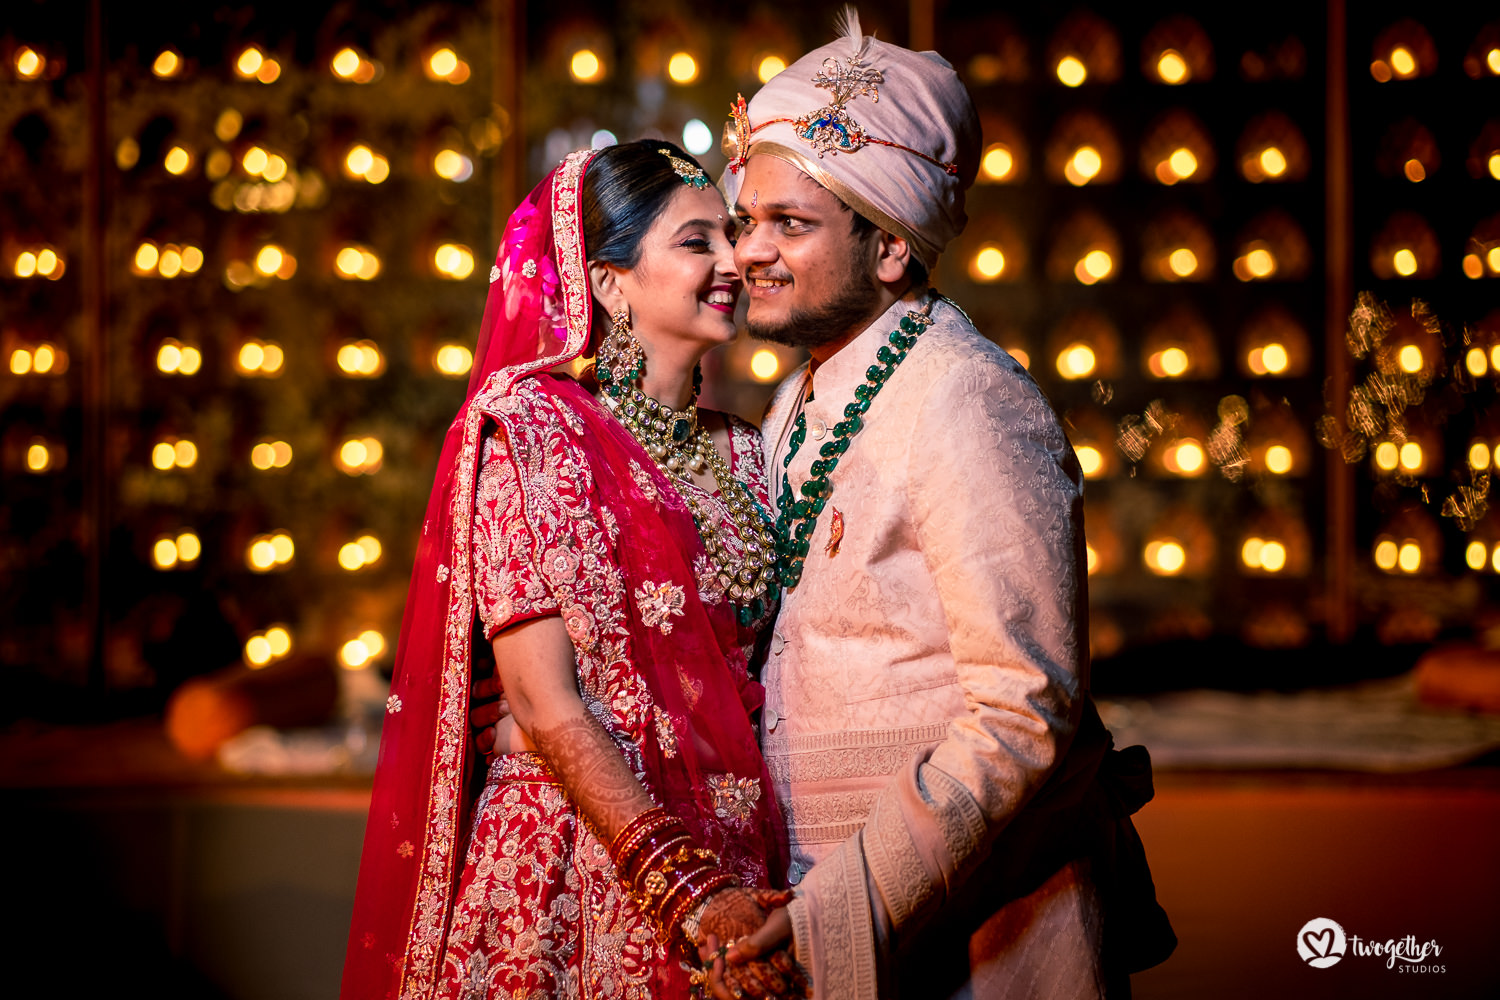 Indian couple wedding portrait at a Jaipur destination wedding.